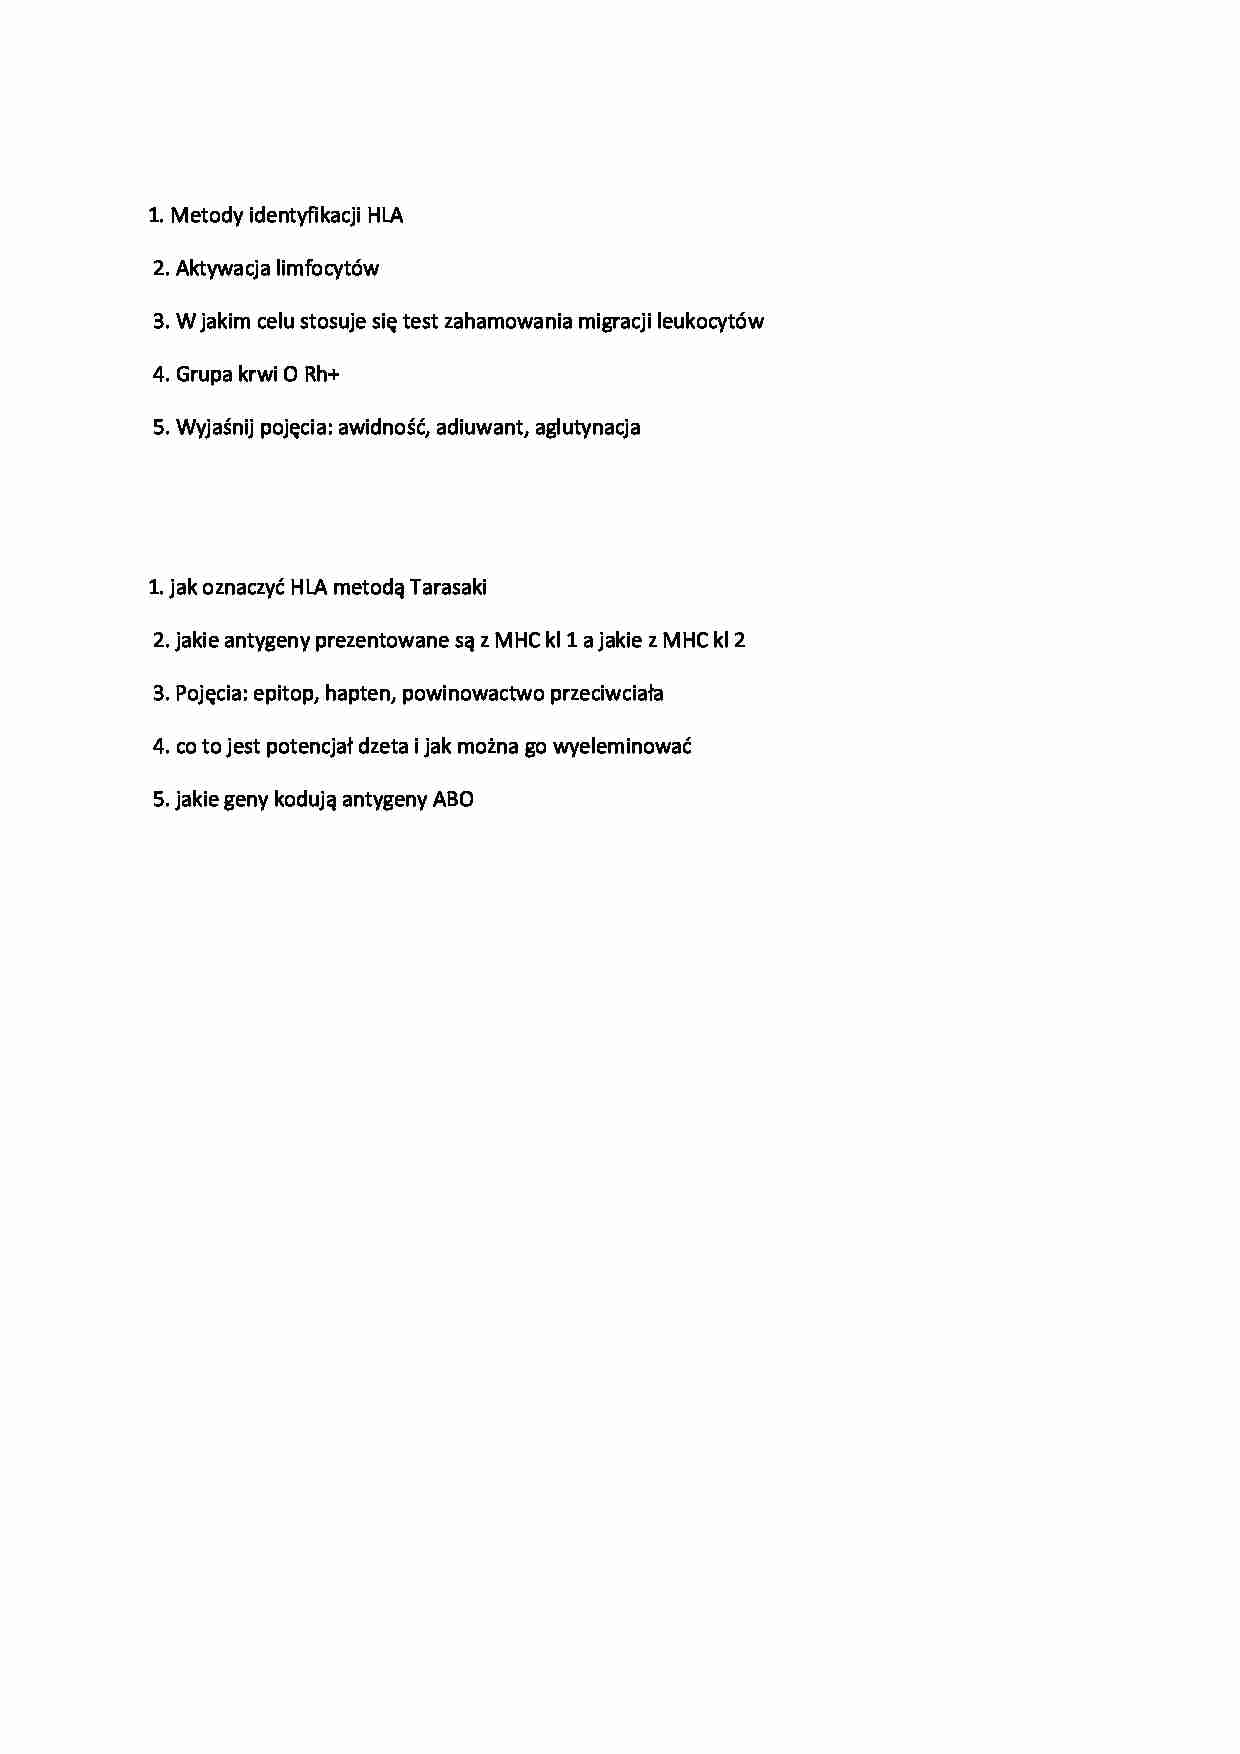 Immunologia - kolokwium 2 - strona 1